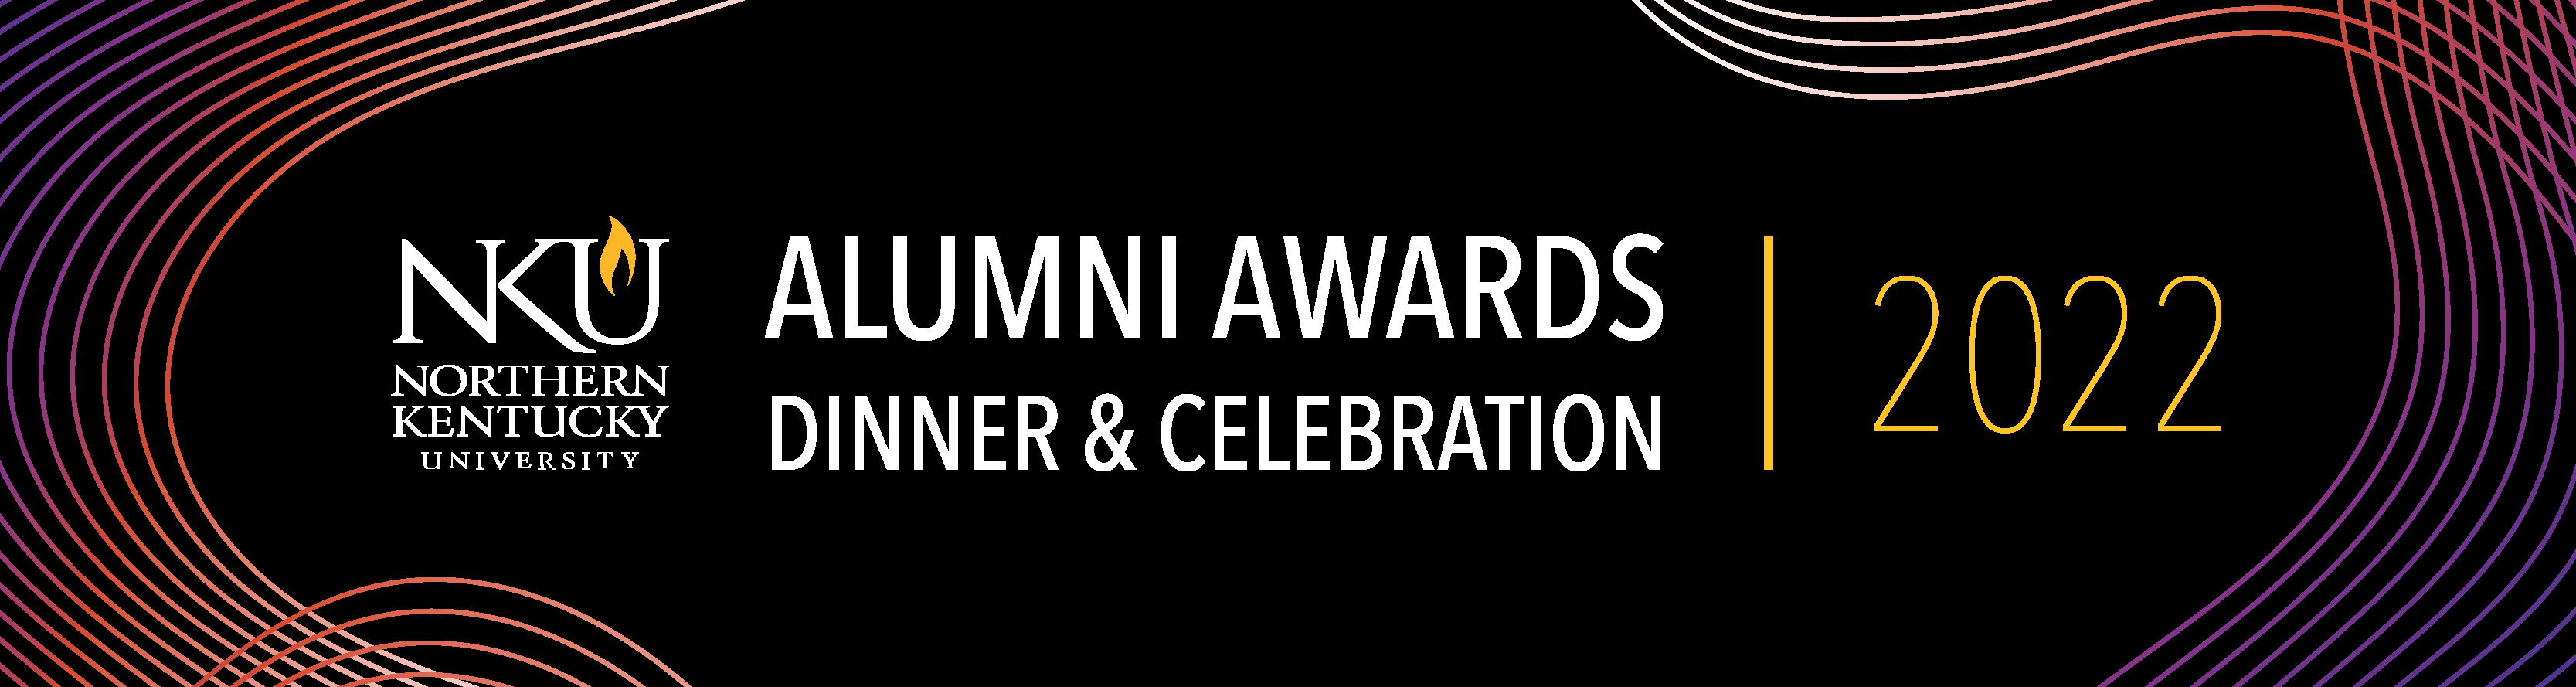 Alumni Awards Dinner Celebration 2022.